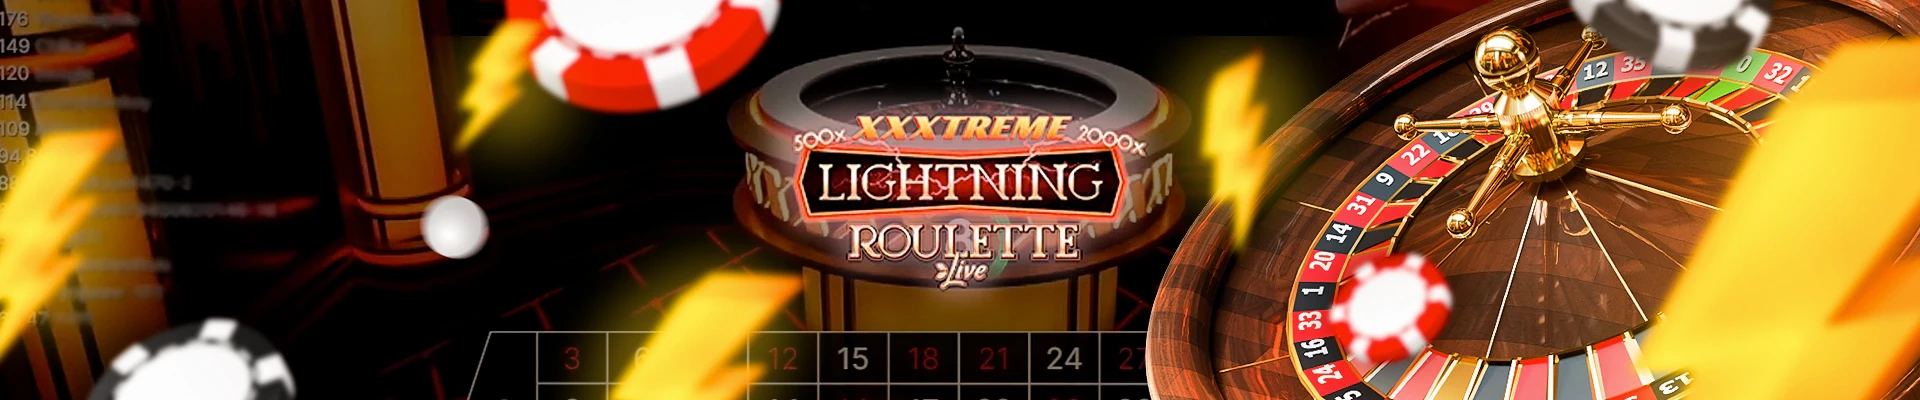 xxxtreme lightning roulette header